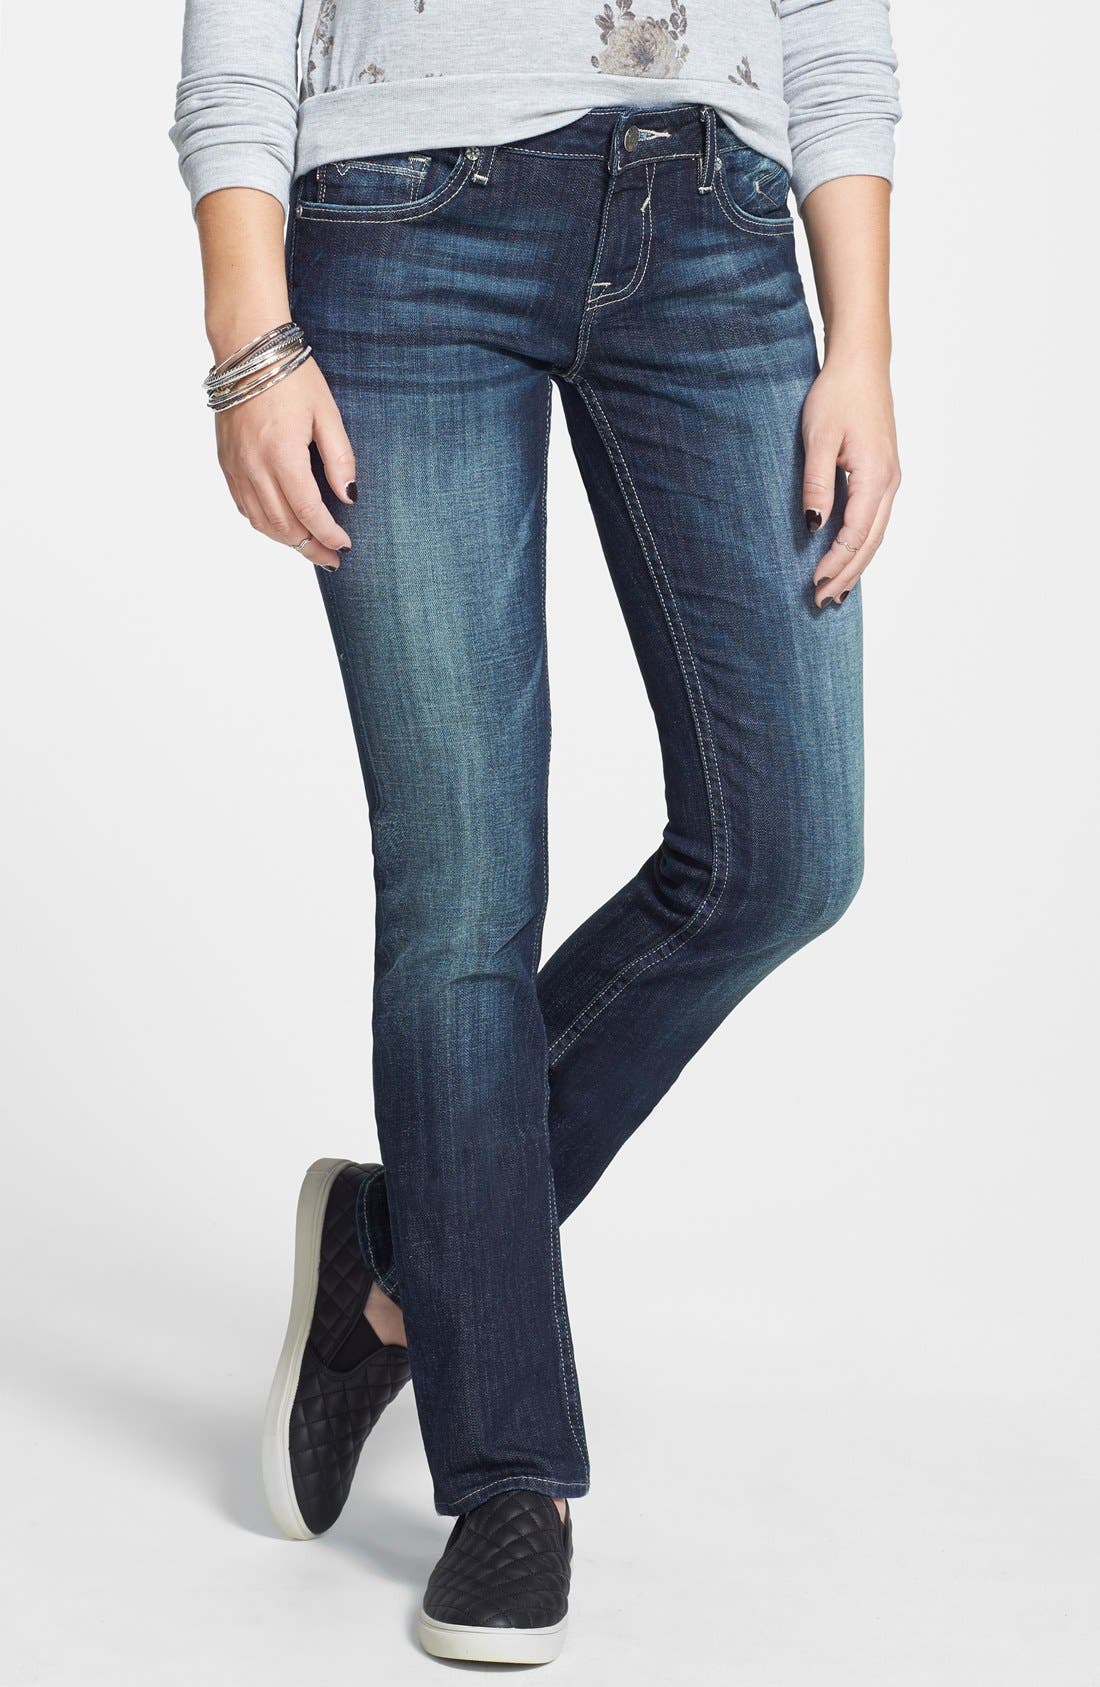 dark bootcut jeans mens